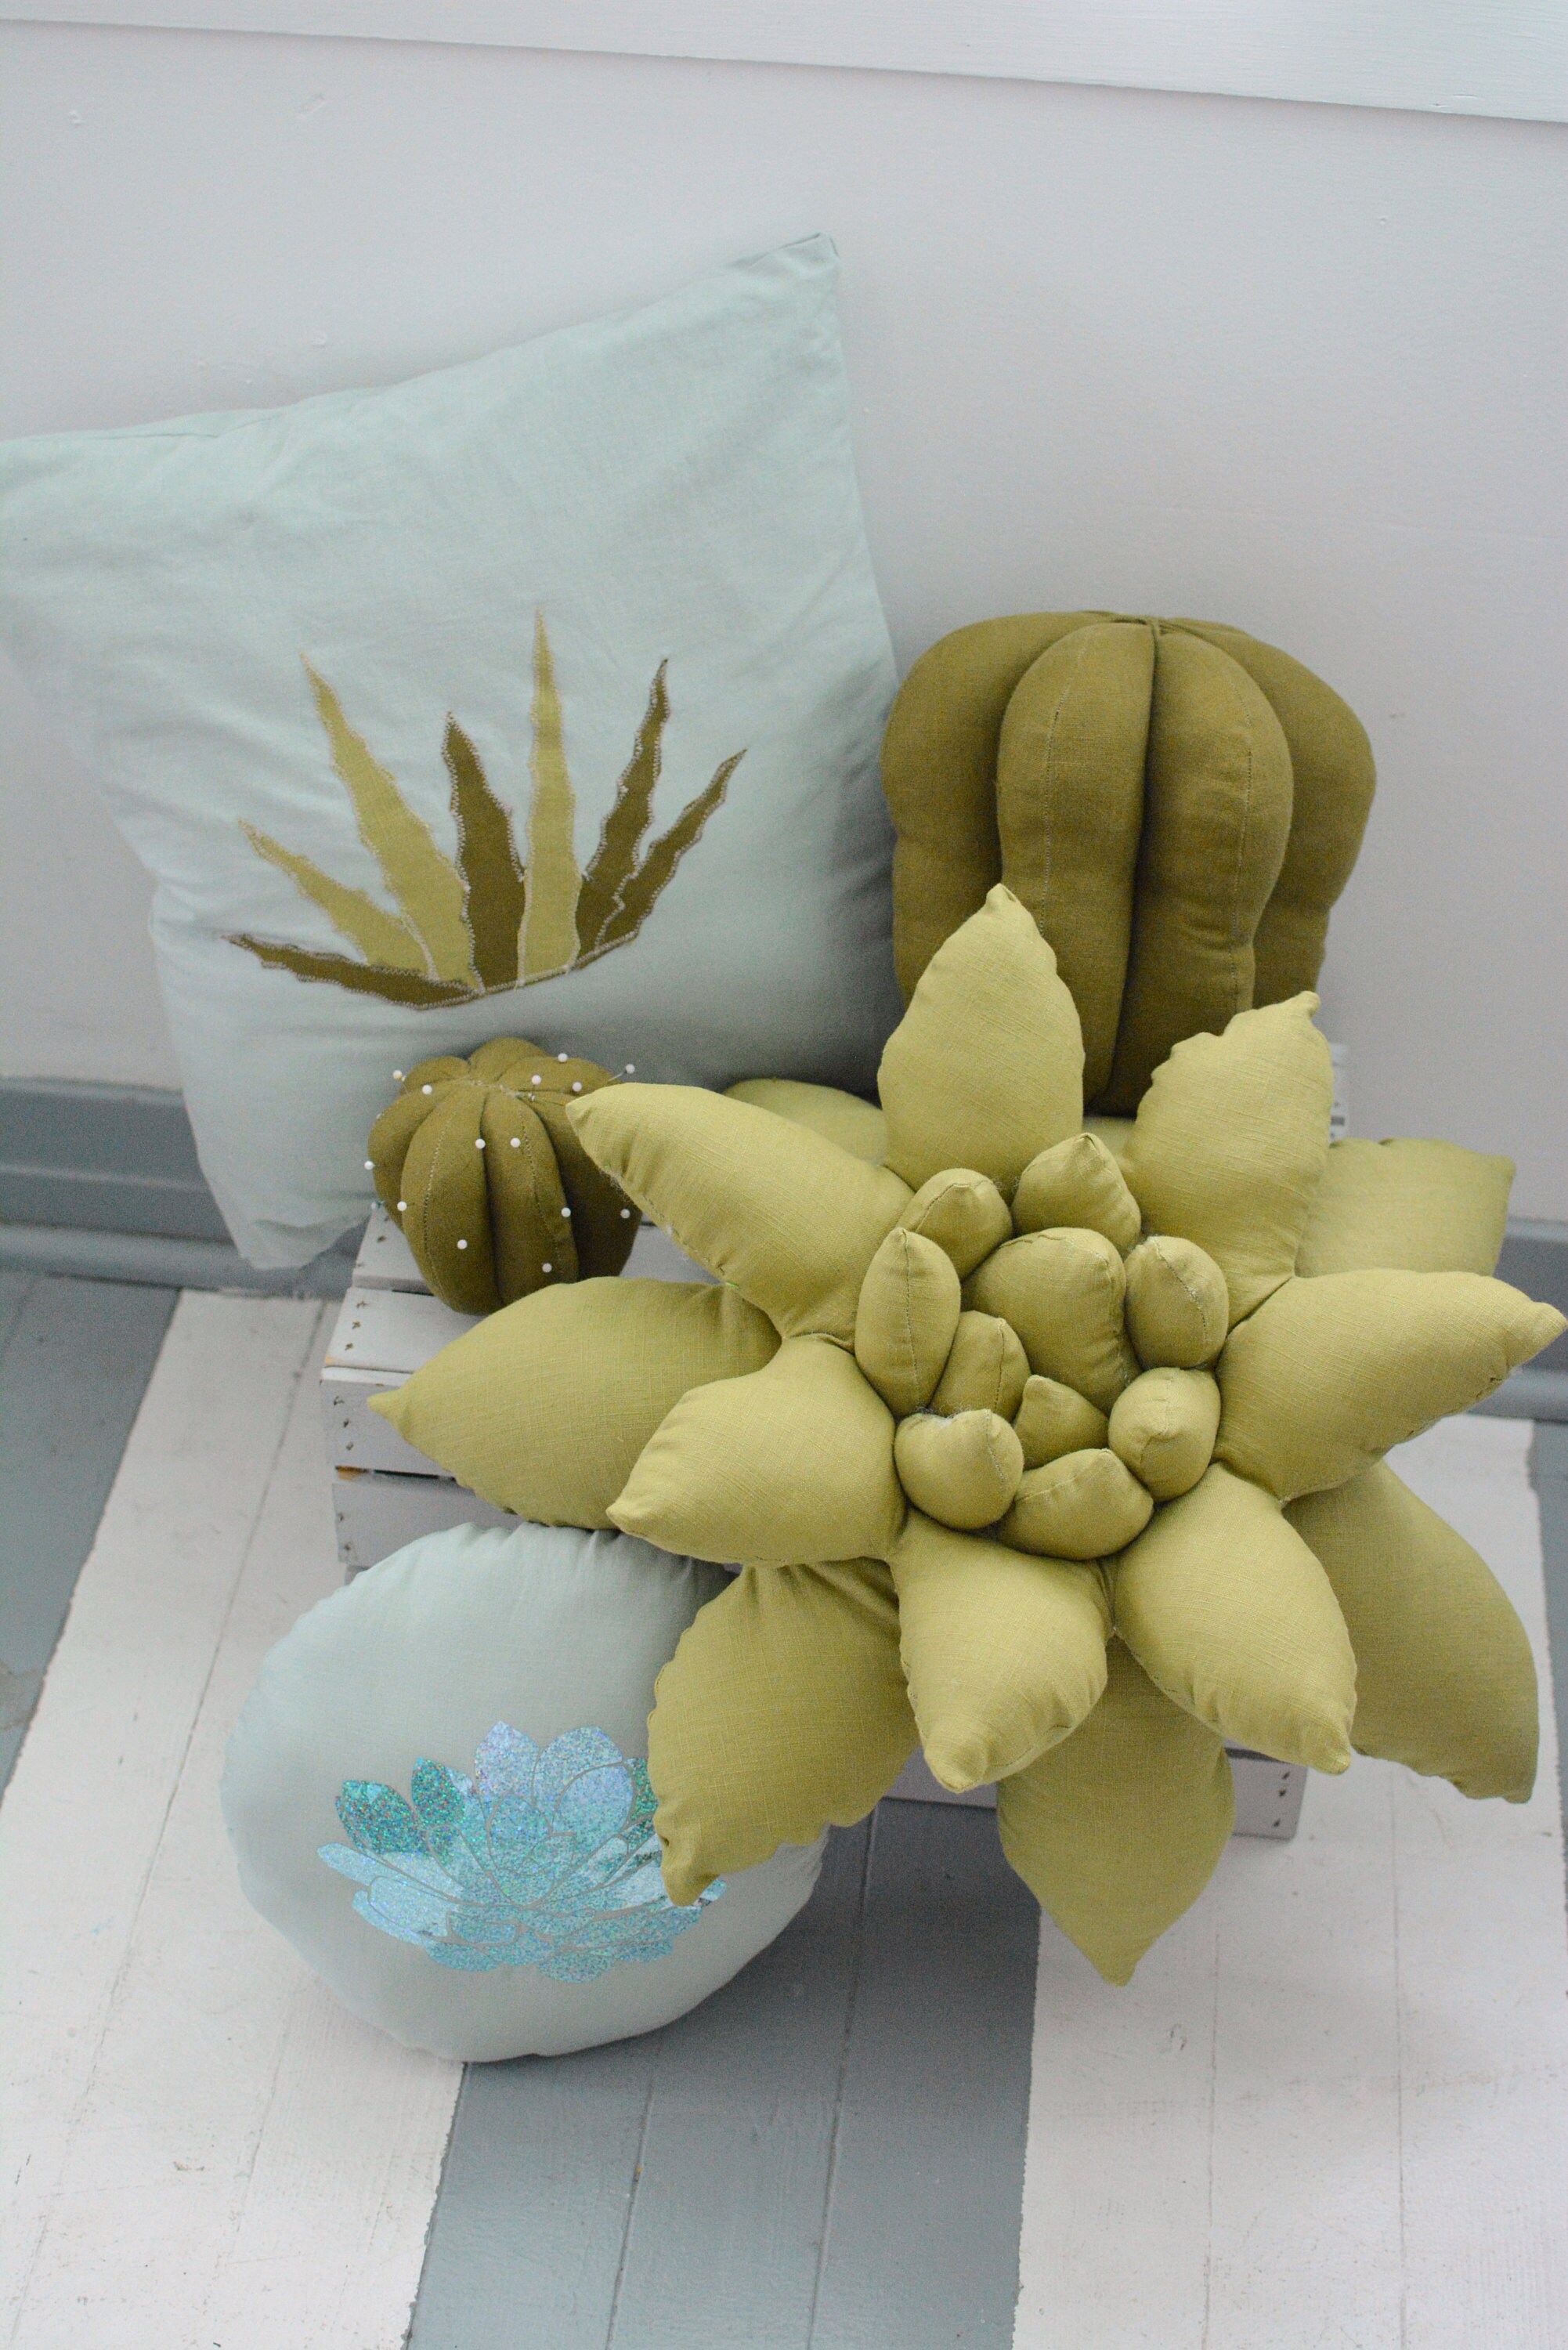 Large 3D Succulent Pillow - Indoor Terrarium and Nursery Decor - Sage Green